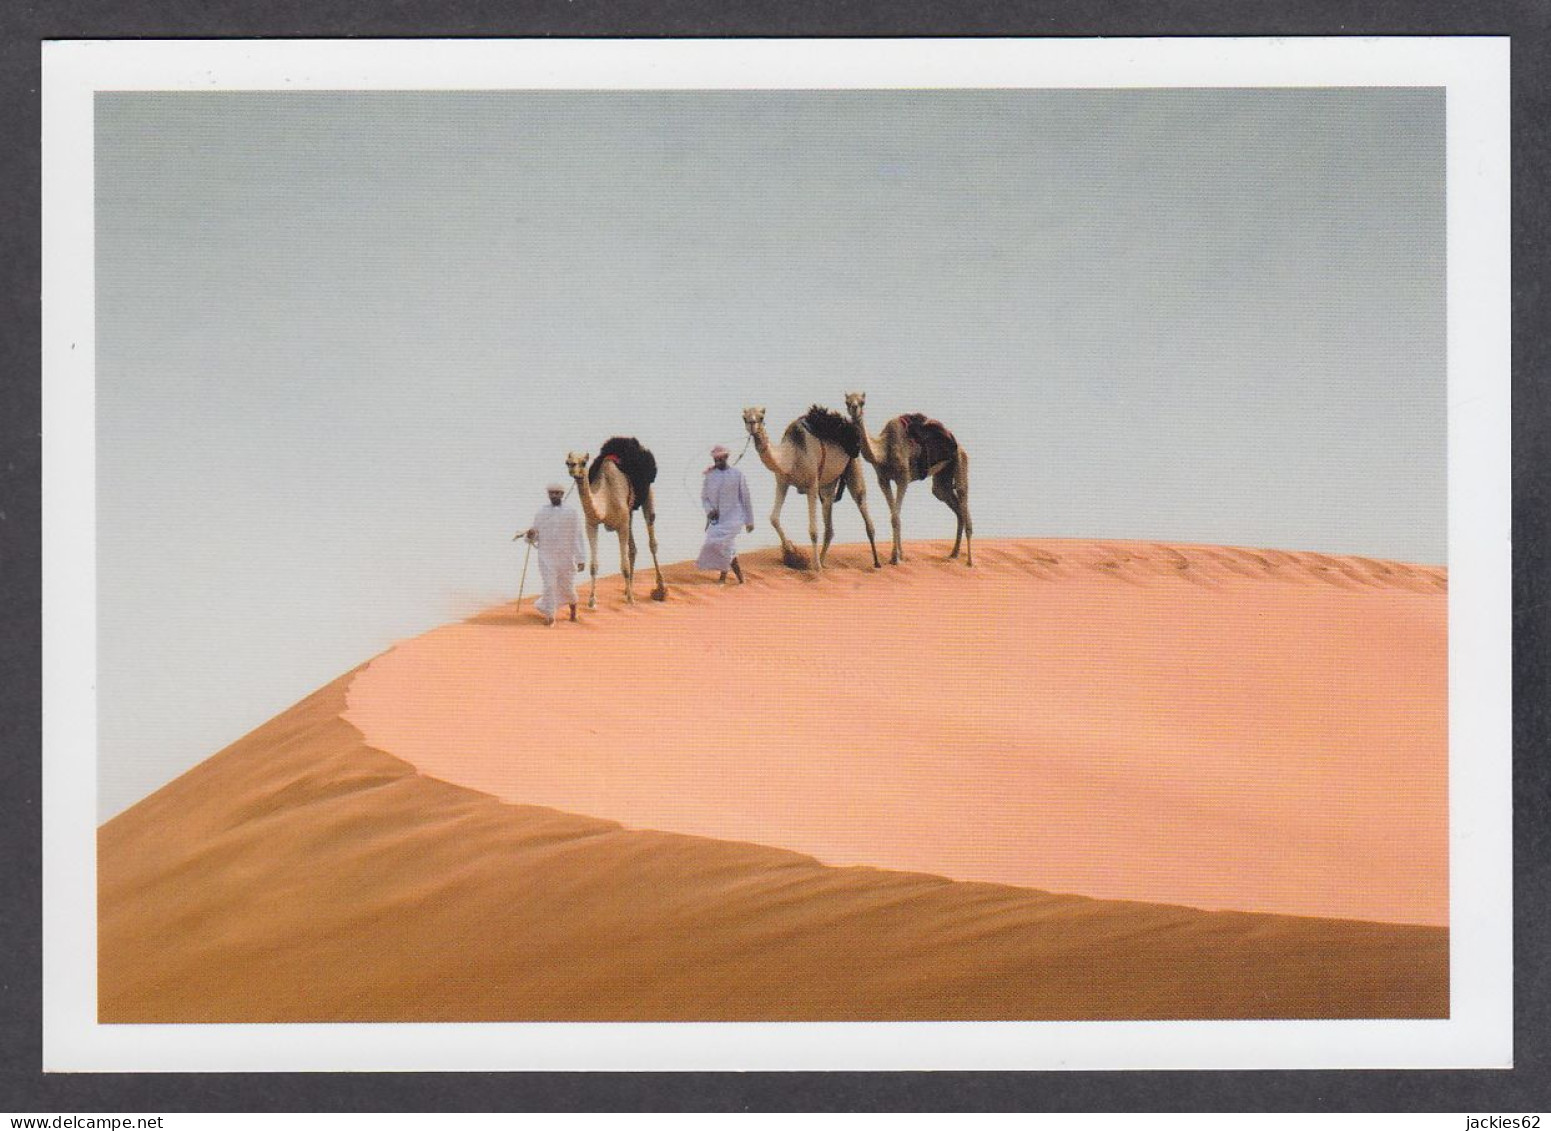 115435/ ABU DHABI, Al Gharbia Region, Dunes In The Liwa Desert - Emirats Arabes Unis